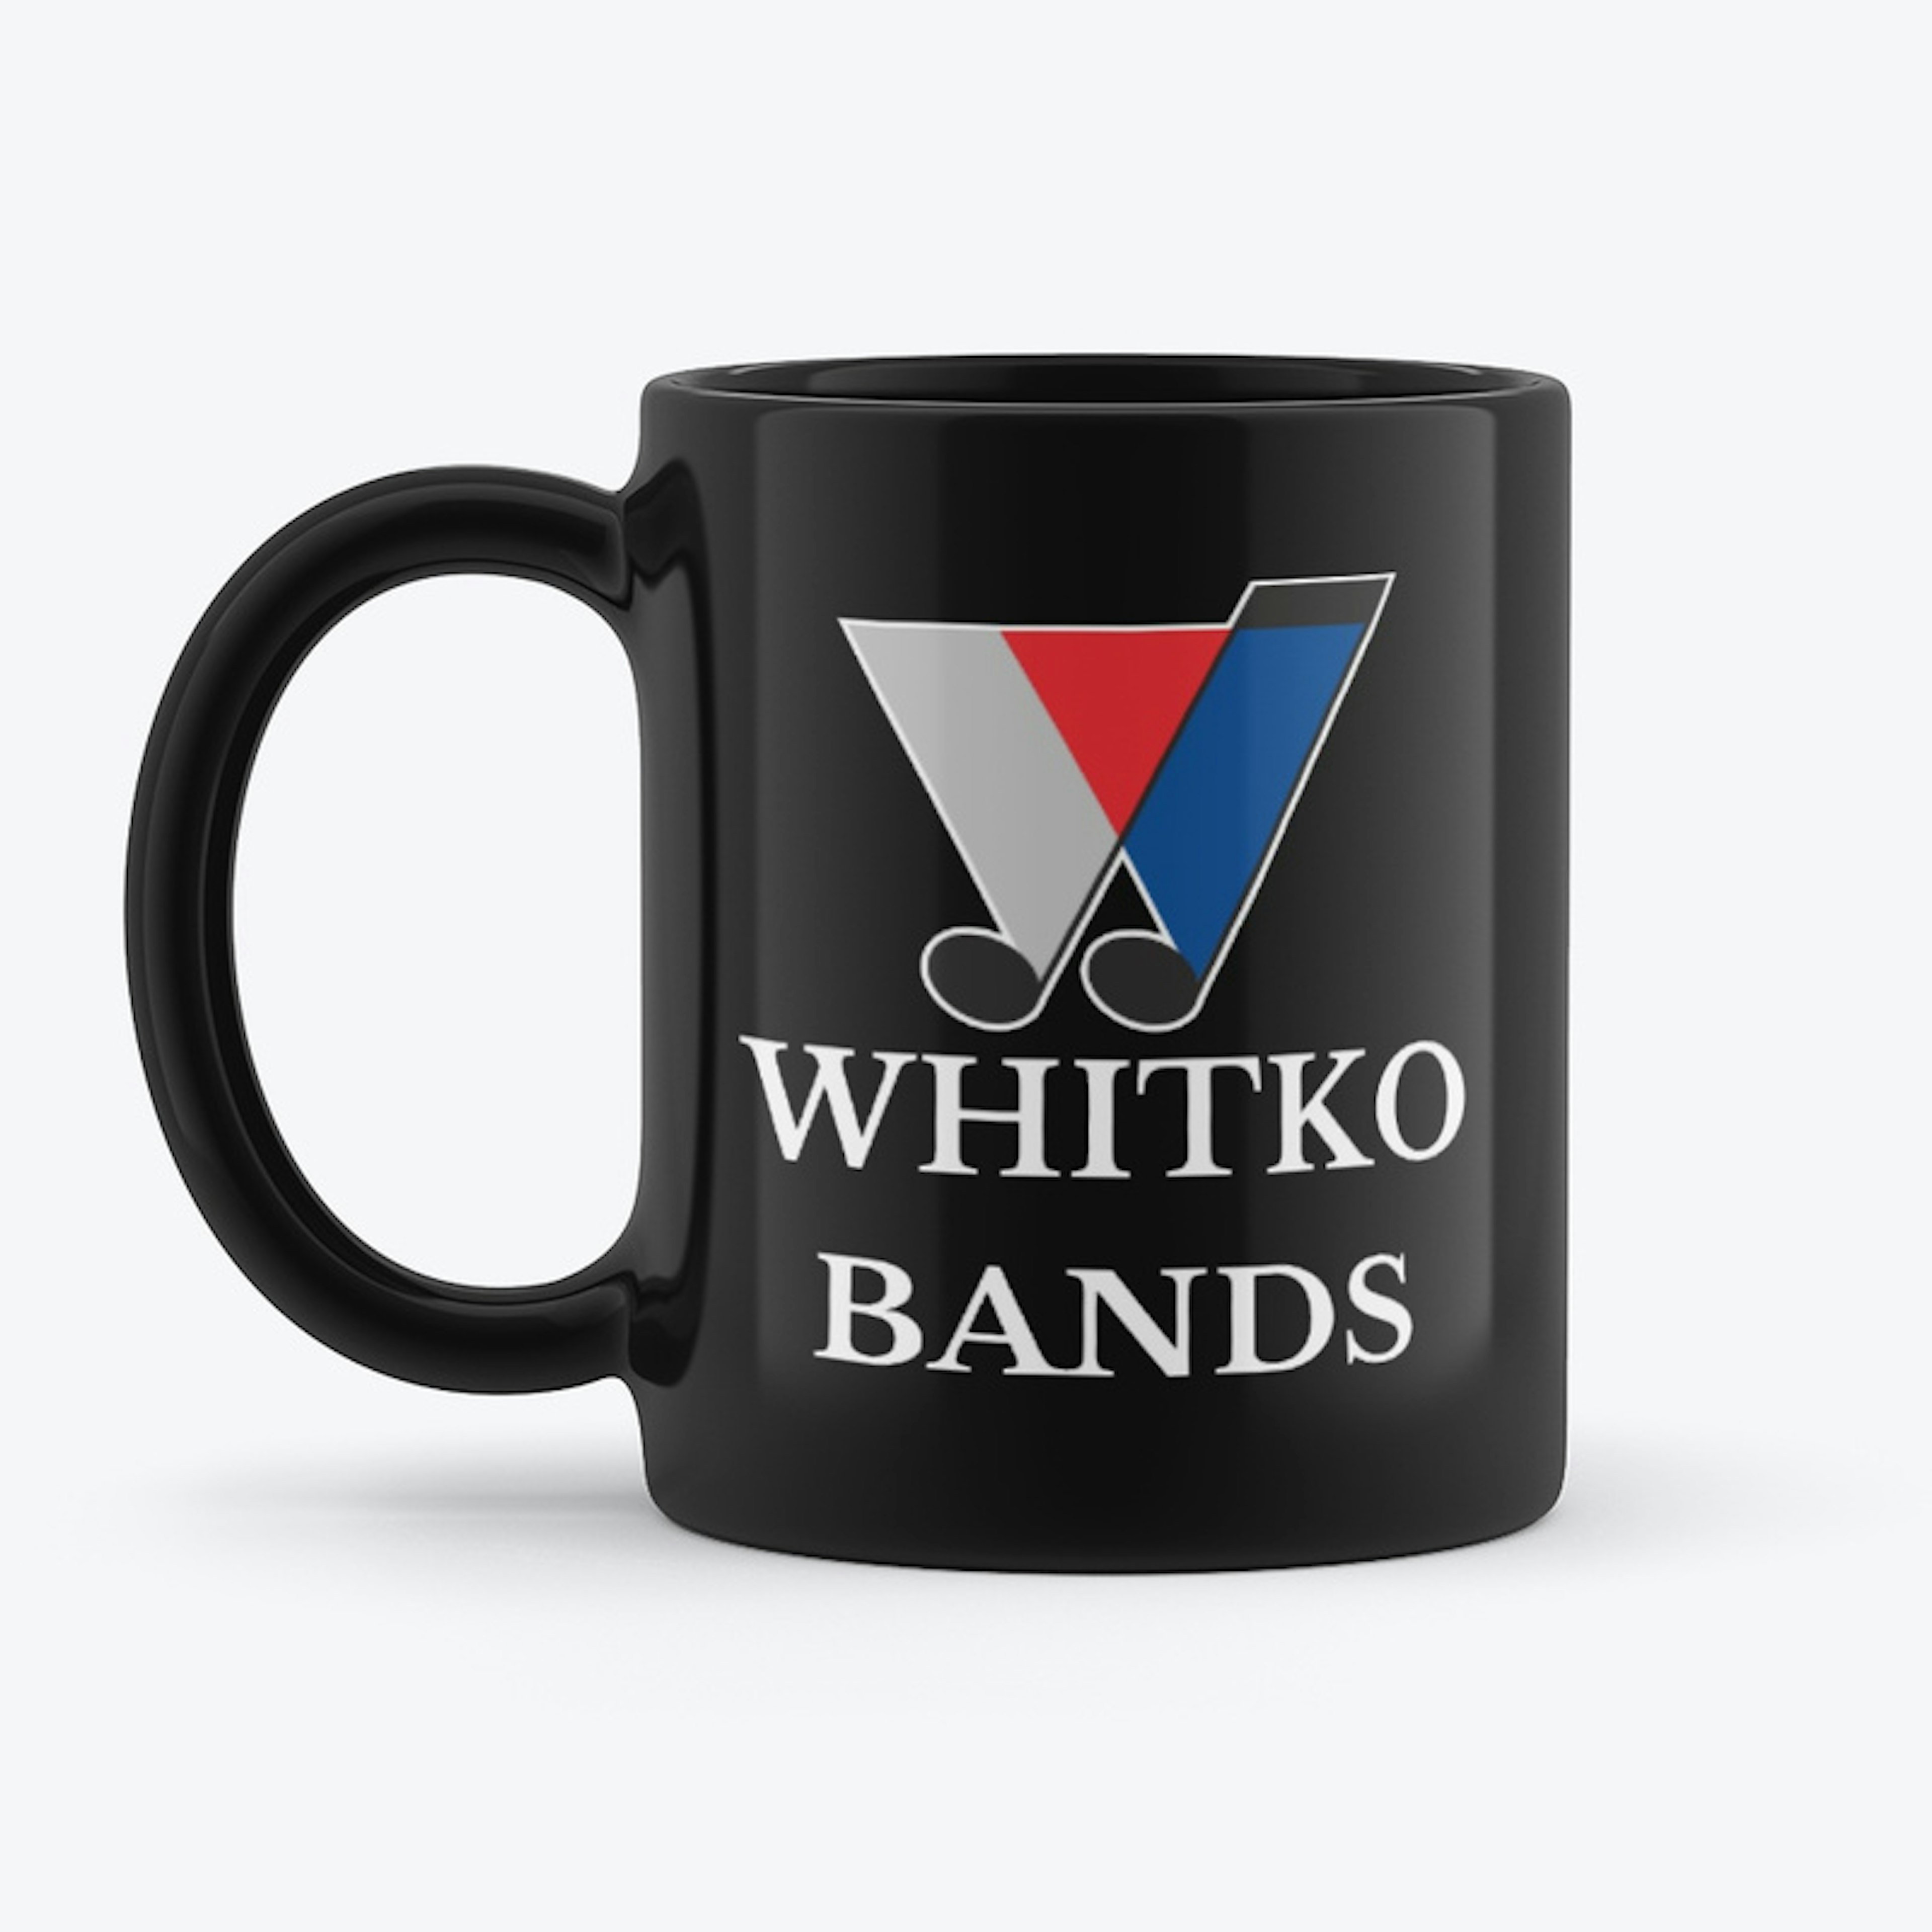 Whitko Bands Coffee Mug